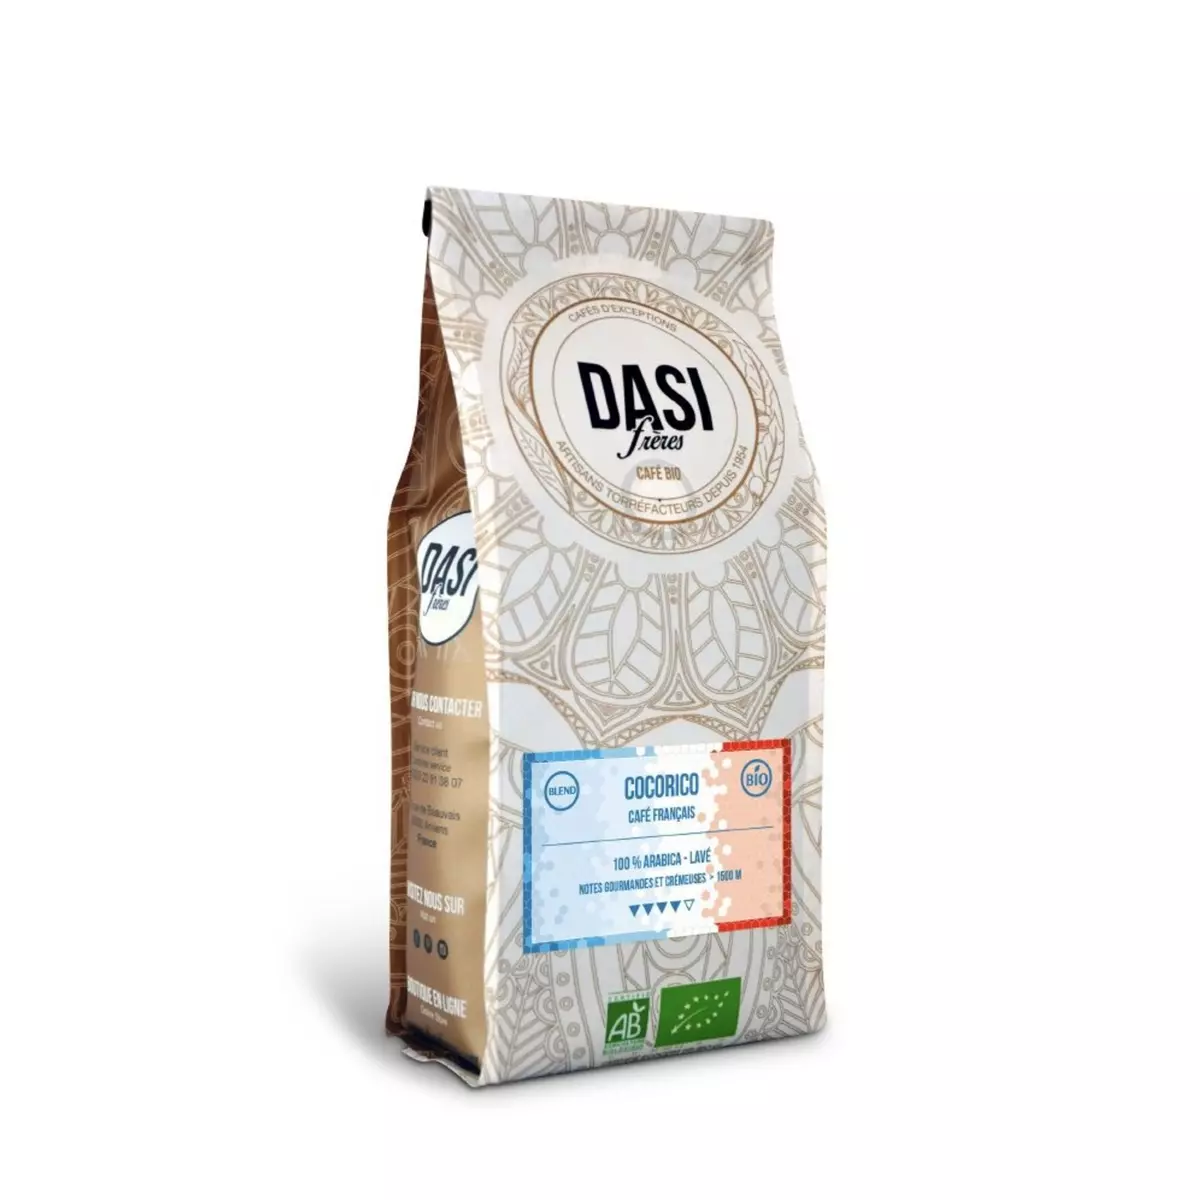 DASI FRERES Café en grain bio Cocorico 100% arabica 250g